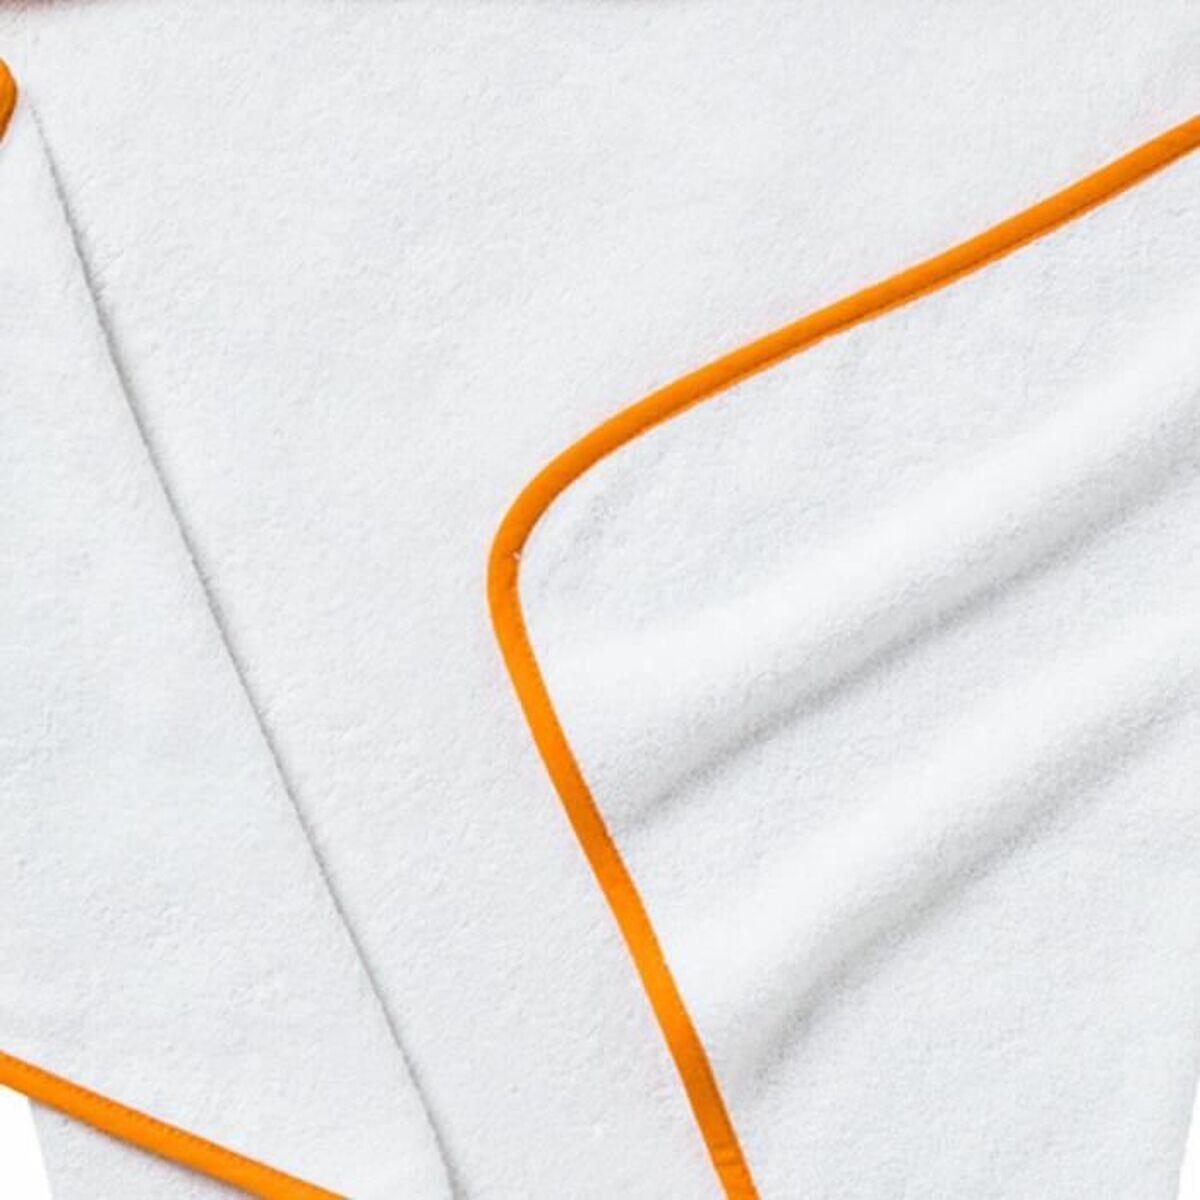 Poncho-Asciugamano con Cappuccio Babycalin 75 x 75 cm Giallo